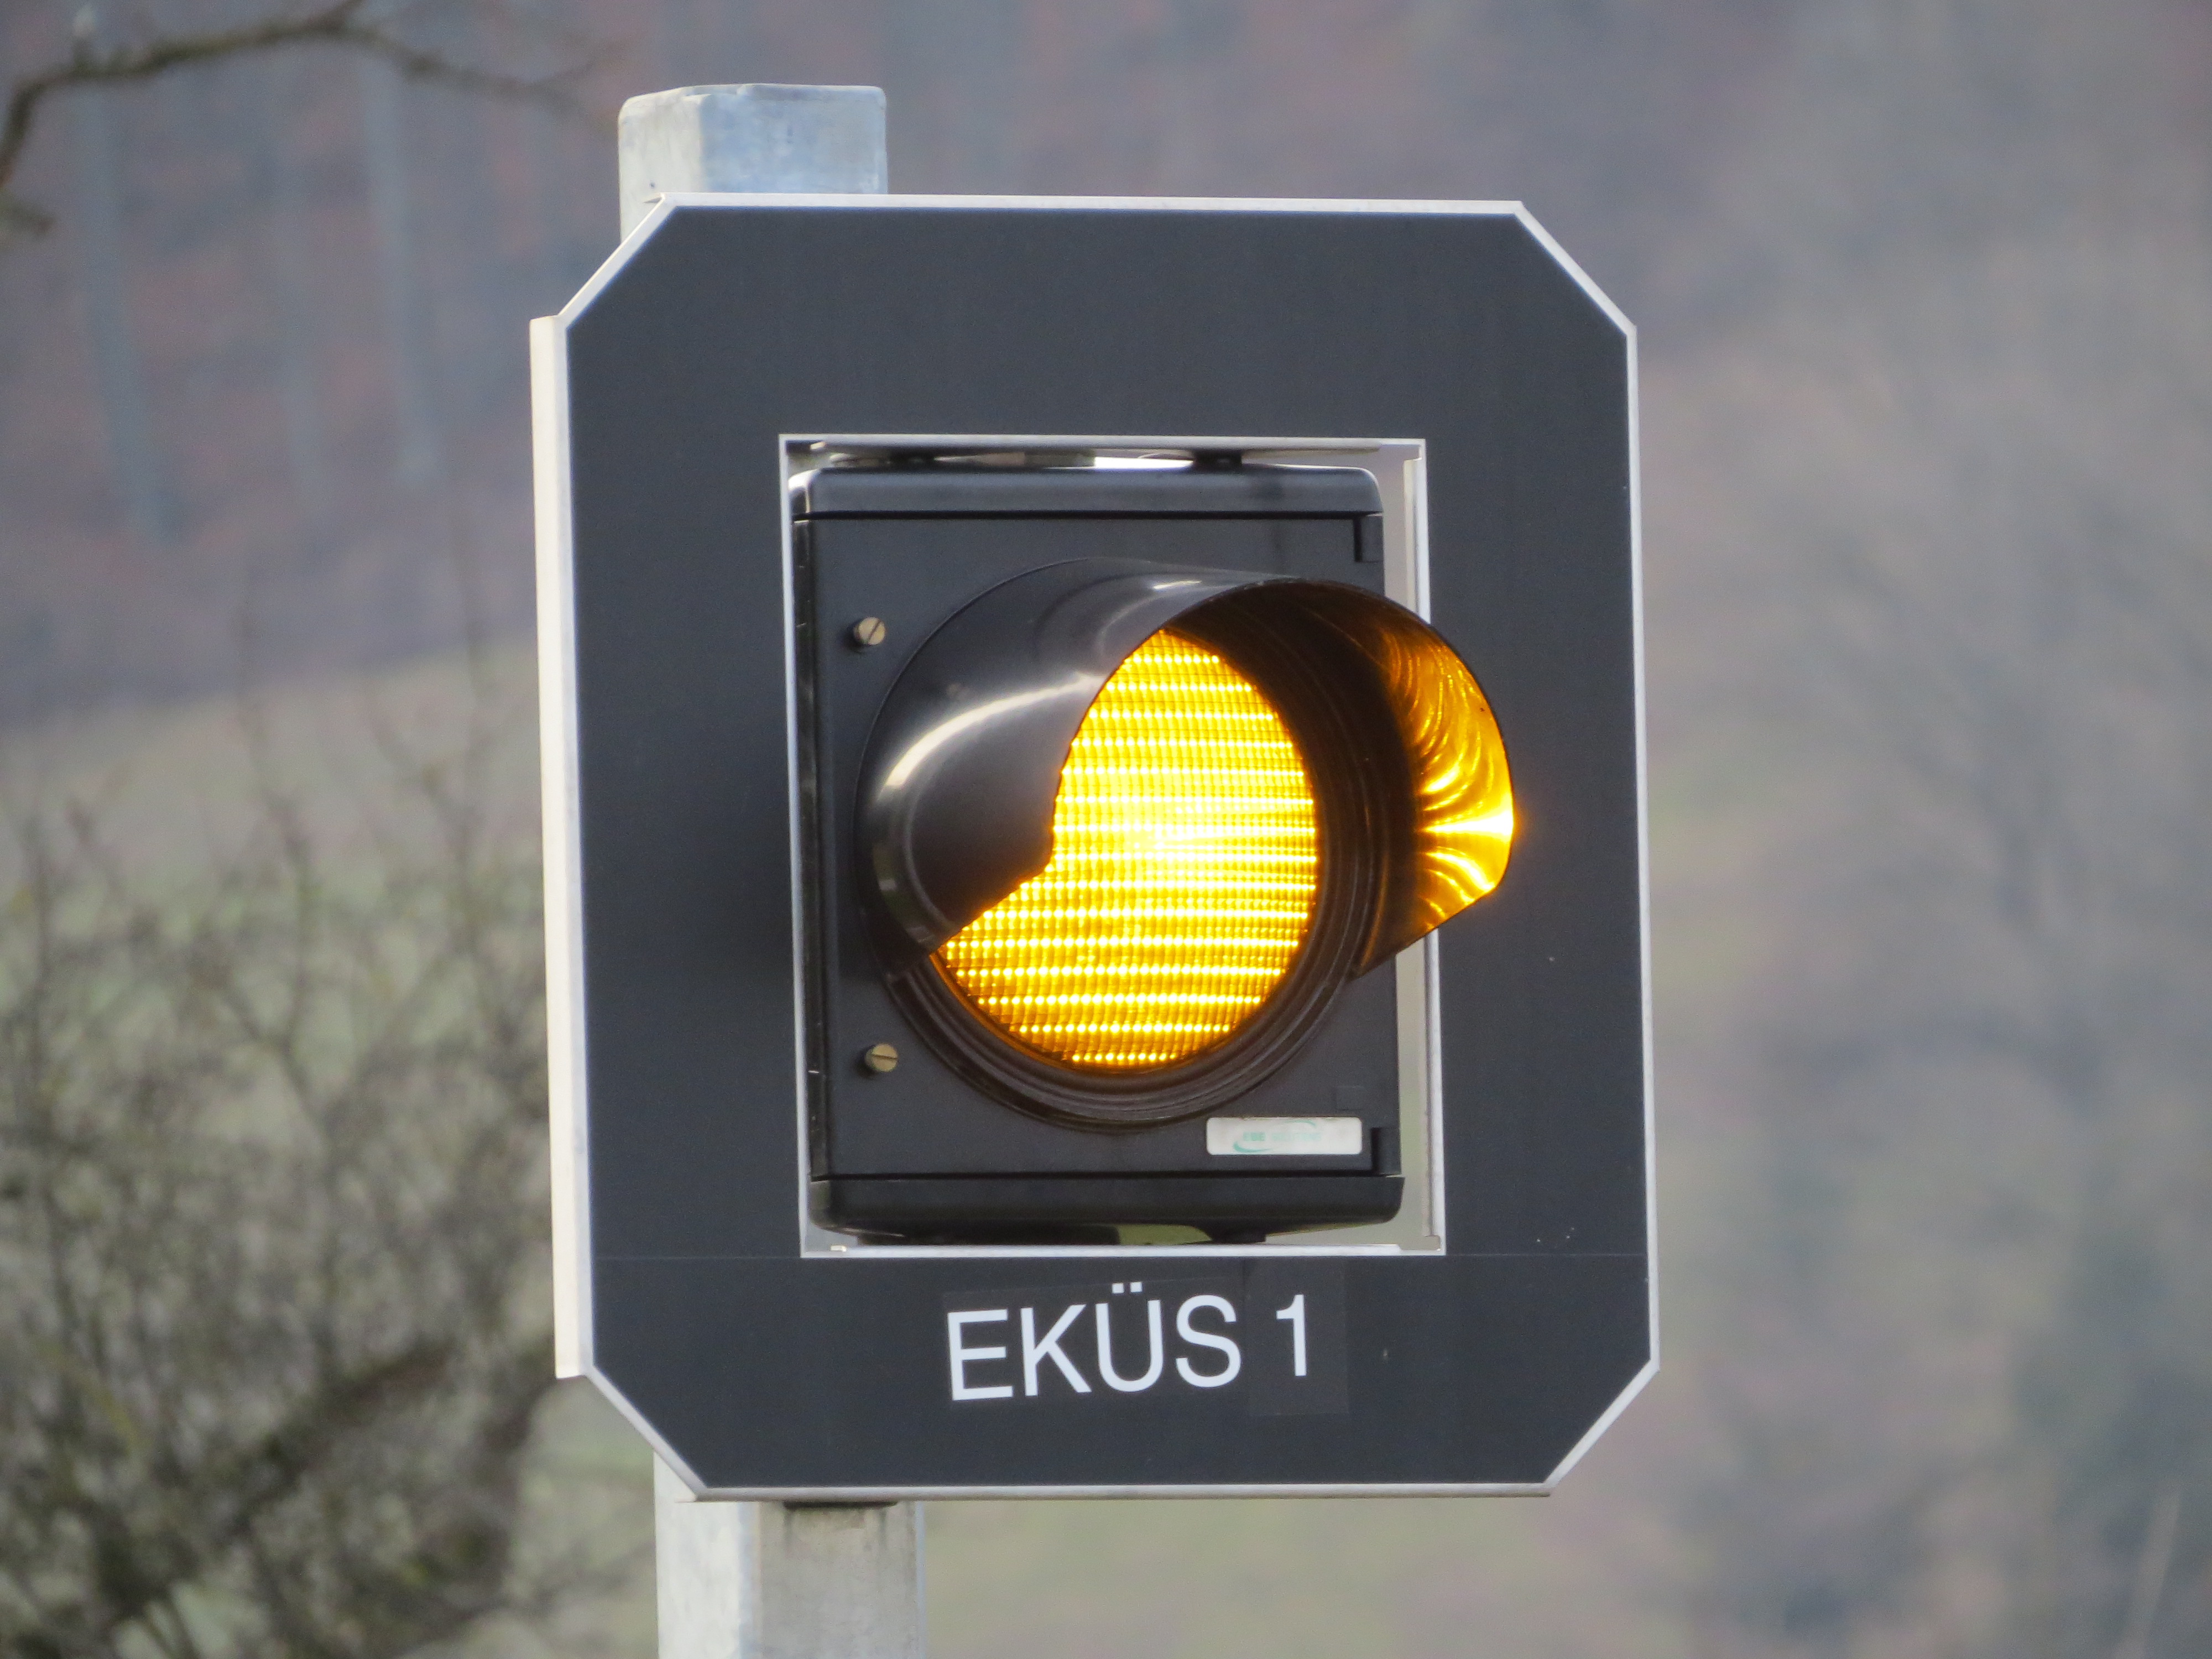 2018-01-28 (234) Railway crossing monitoring signal (EKÜS 1) for the Mariazellerbahn at Schloßgegend in Kirchberg an der Pielach